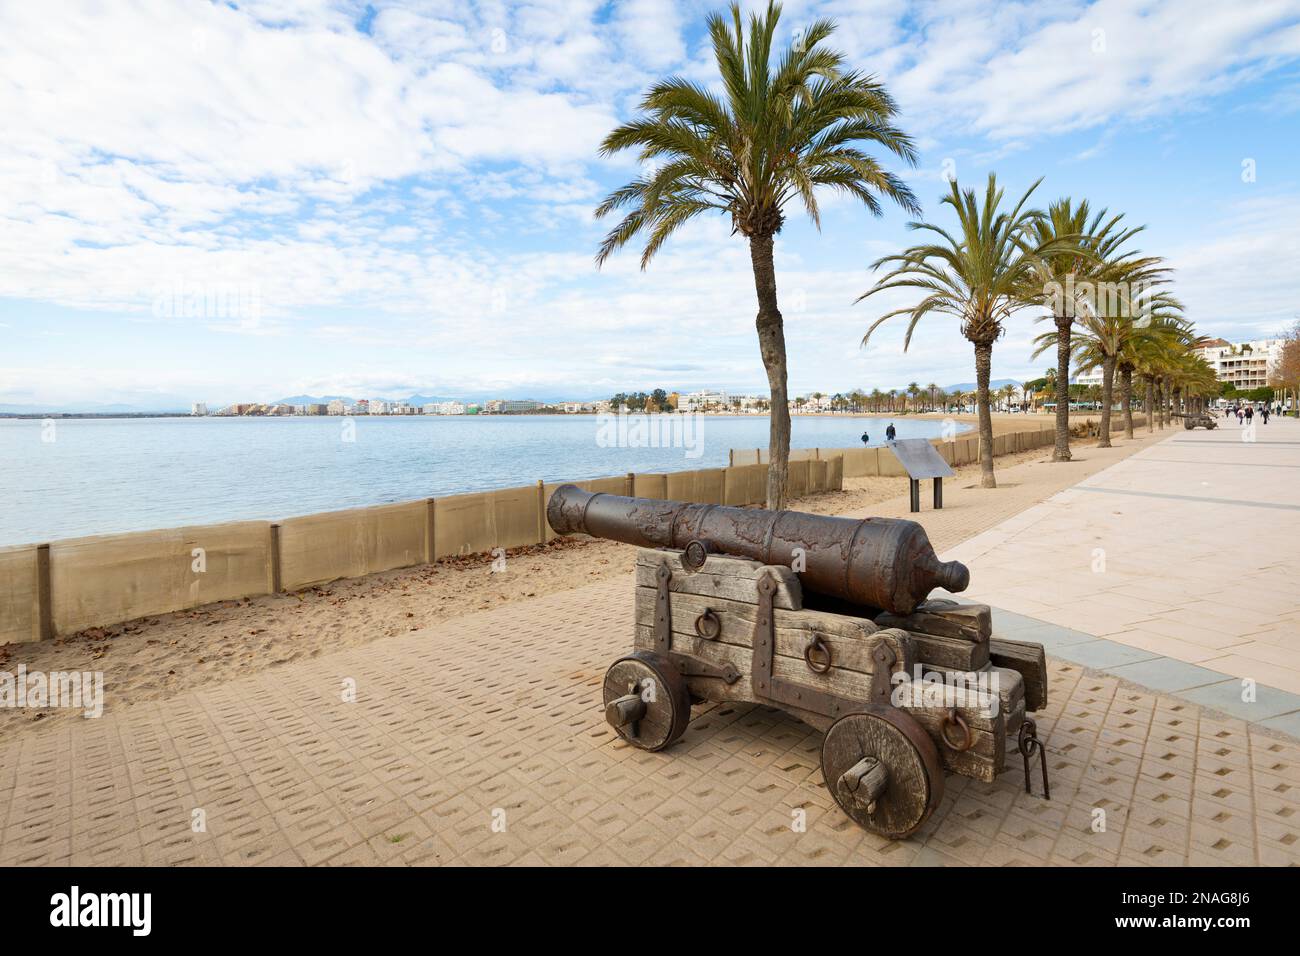 Old canon gun at Passeig marítim de Roses (Roses promenade). Alt Empordà, Girona, Catalonia, Spain, Europe. Stock Photo